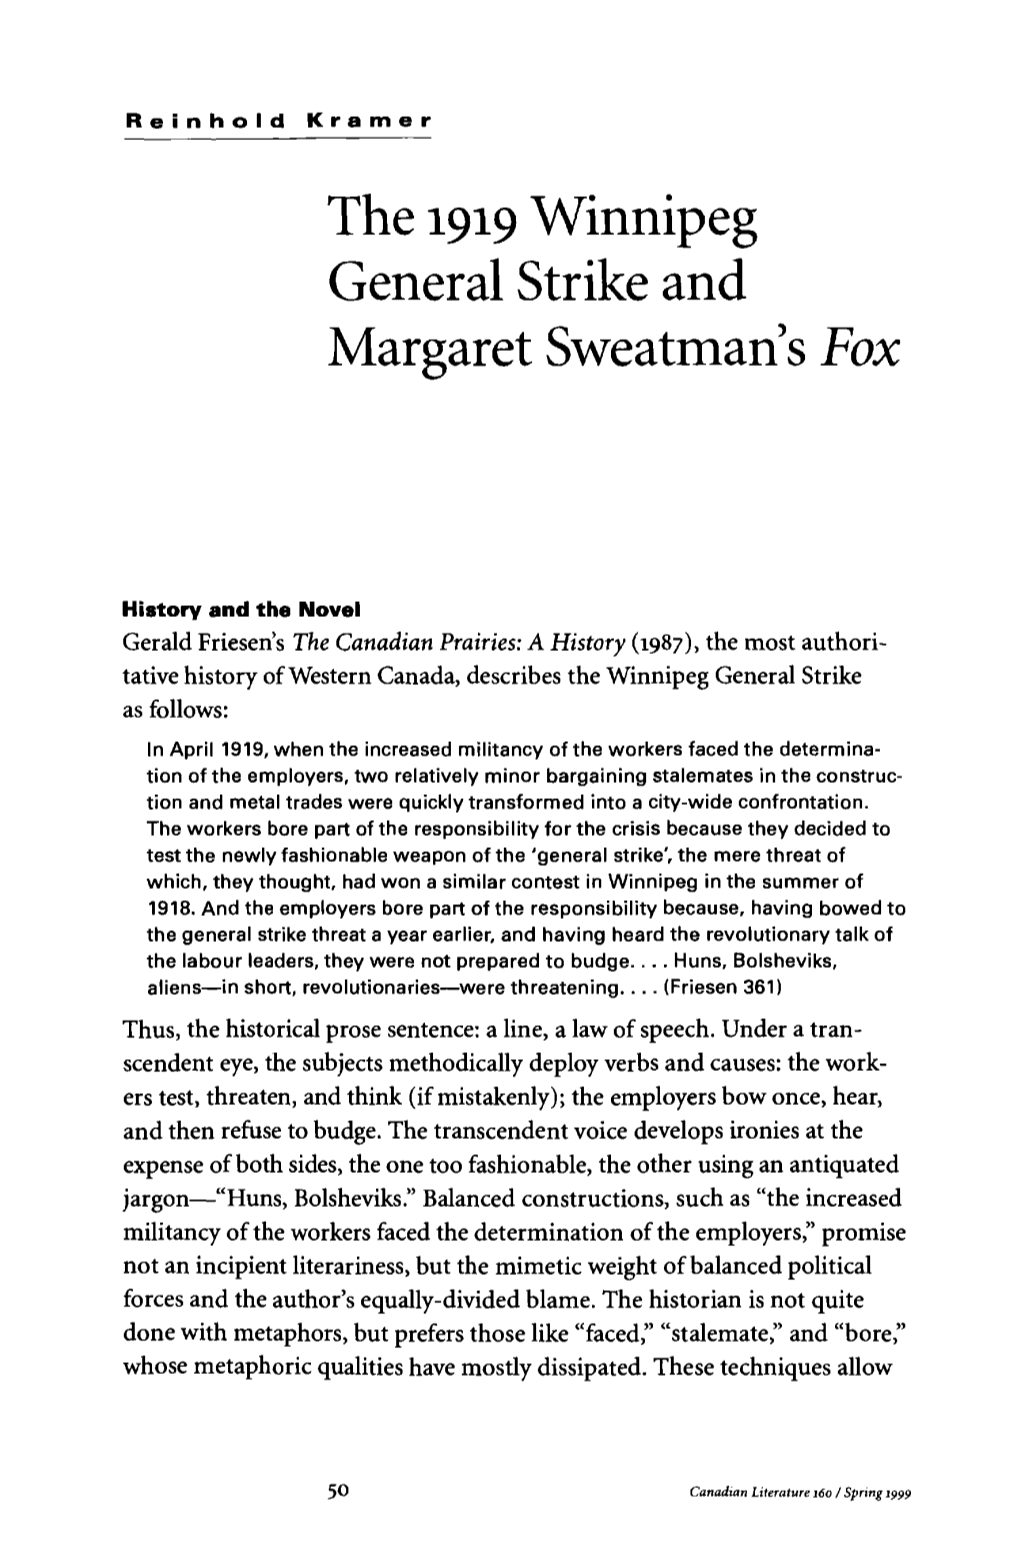 The 1919 Winnipeg General Strike and Margaret Sweatman'sfox